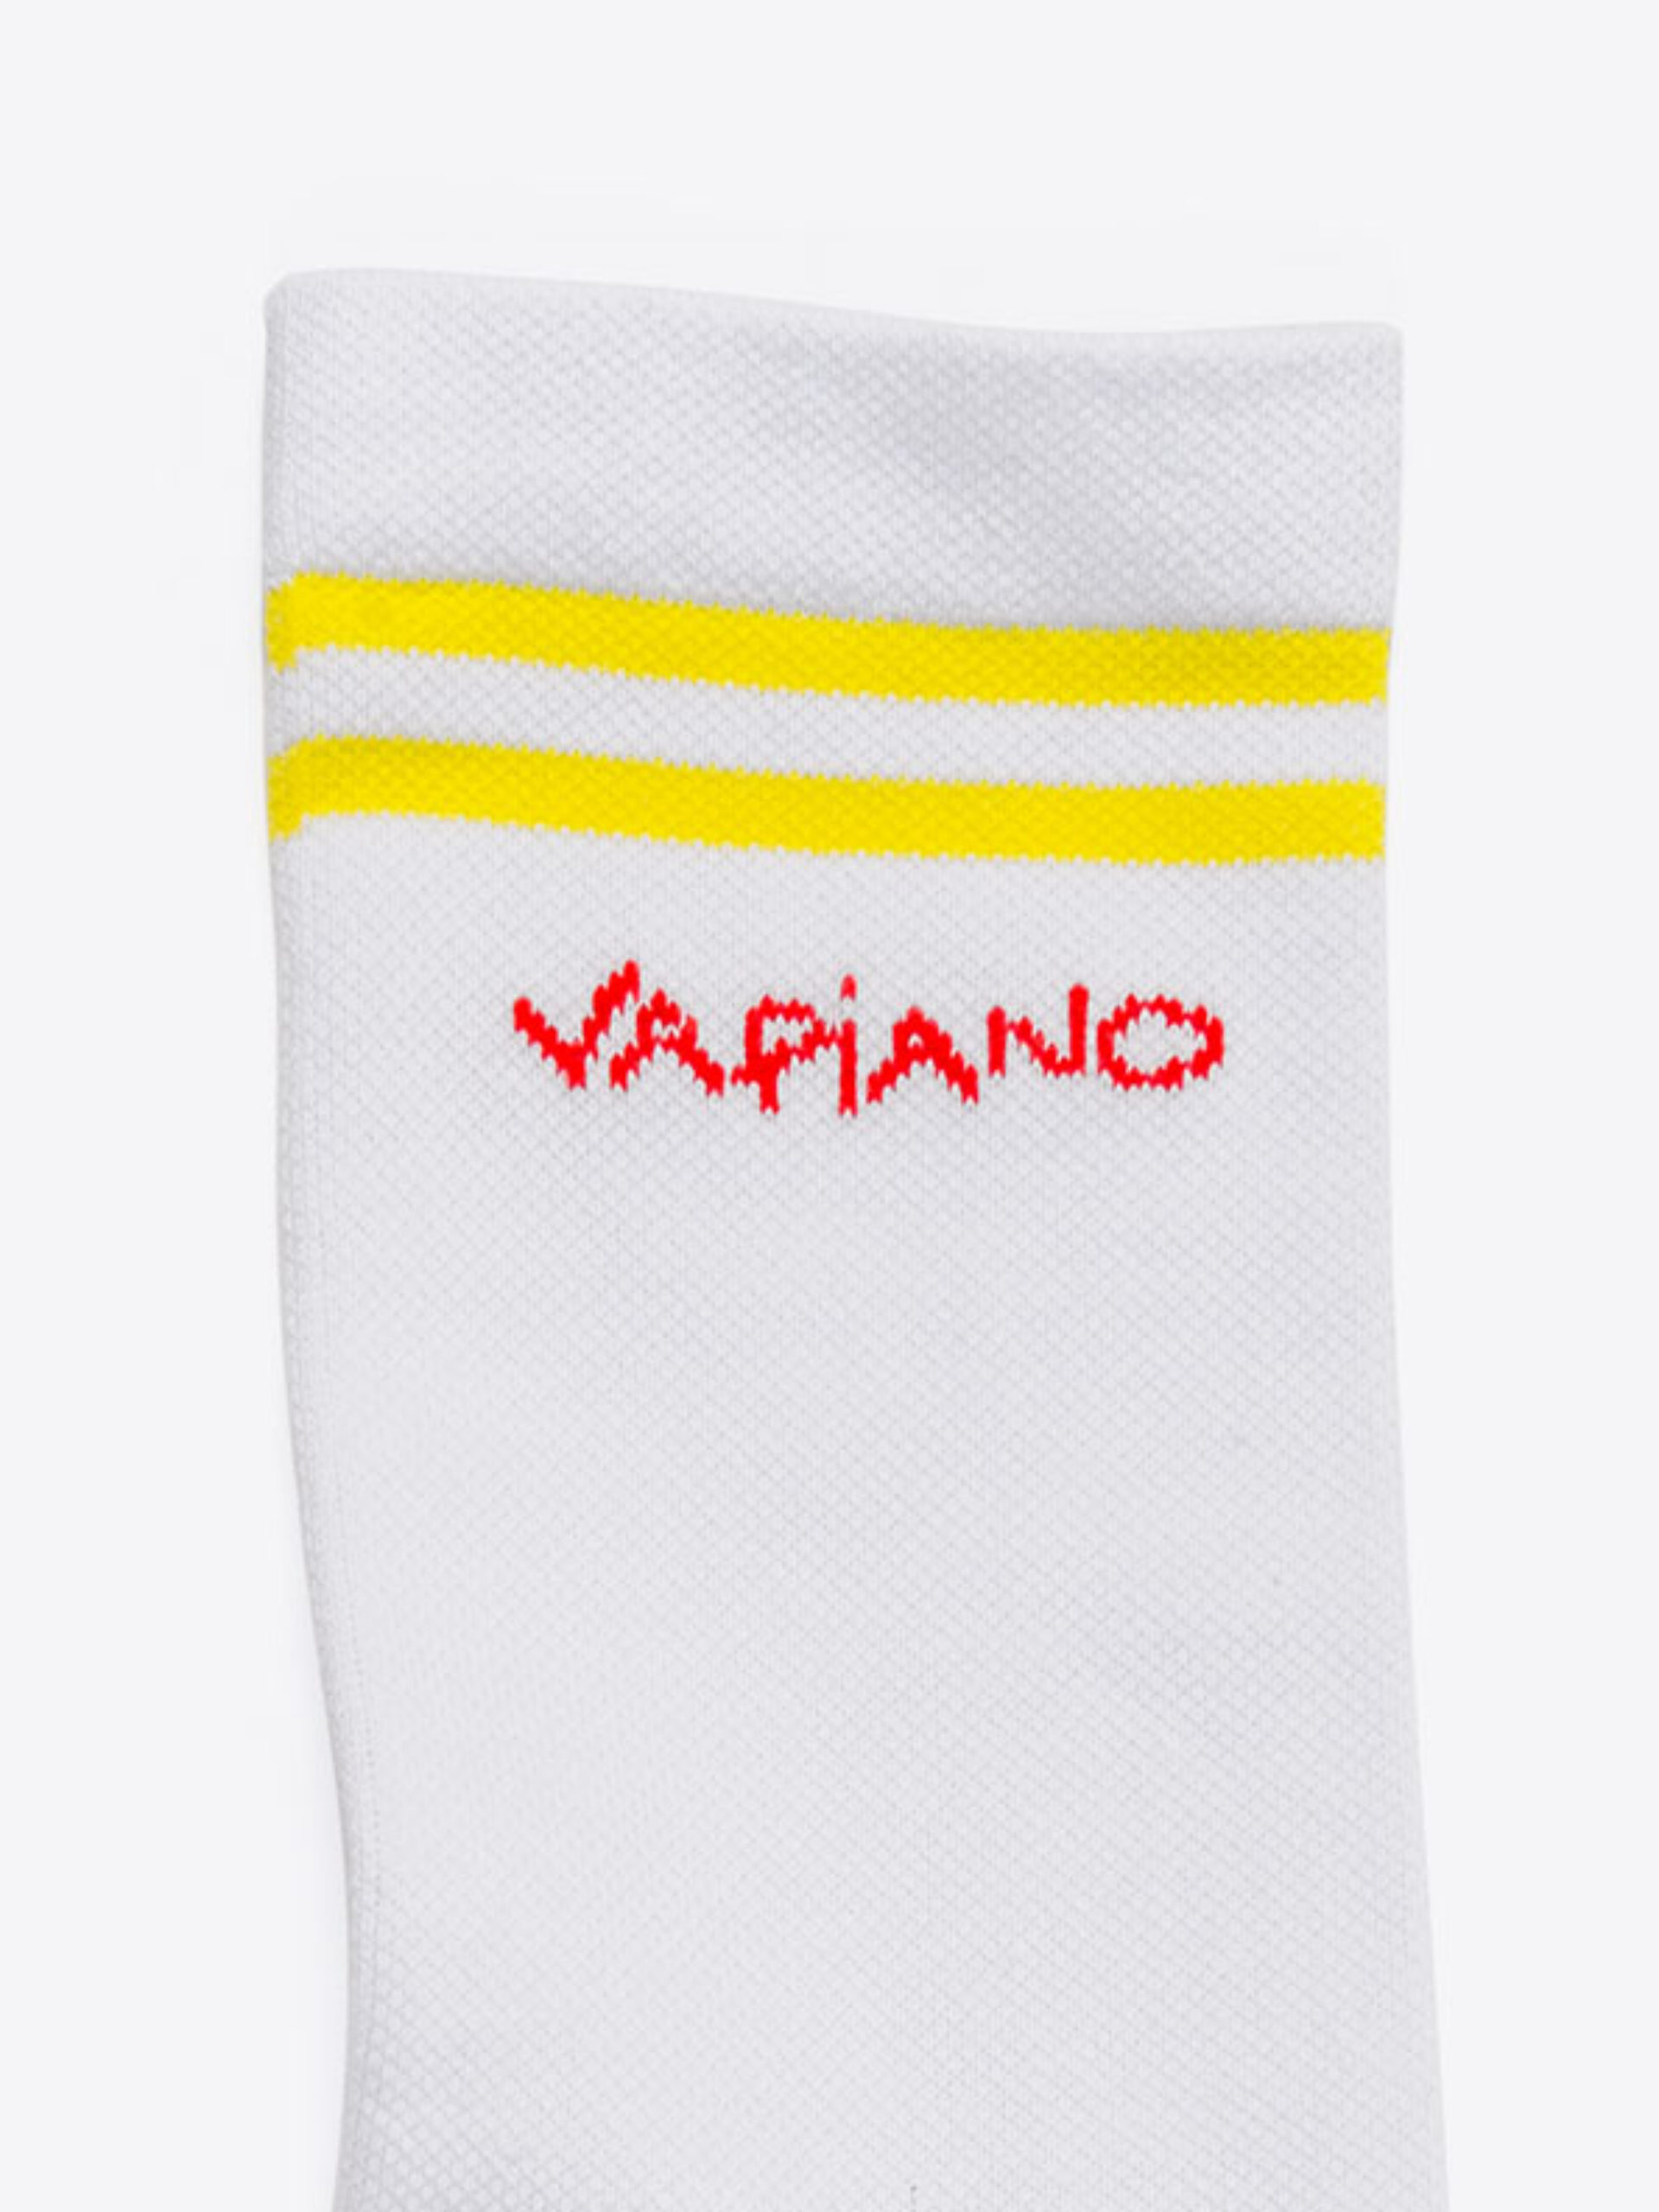 Sportsocken Light Vapiano Logo Einweben Baumwolle Polyamid Elastan Massgeschneidert Auf Mass Diverse Farben